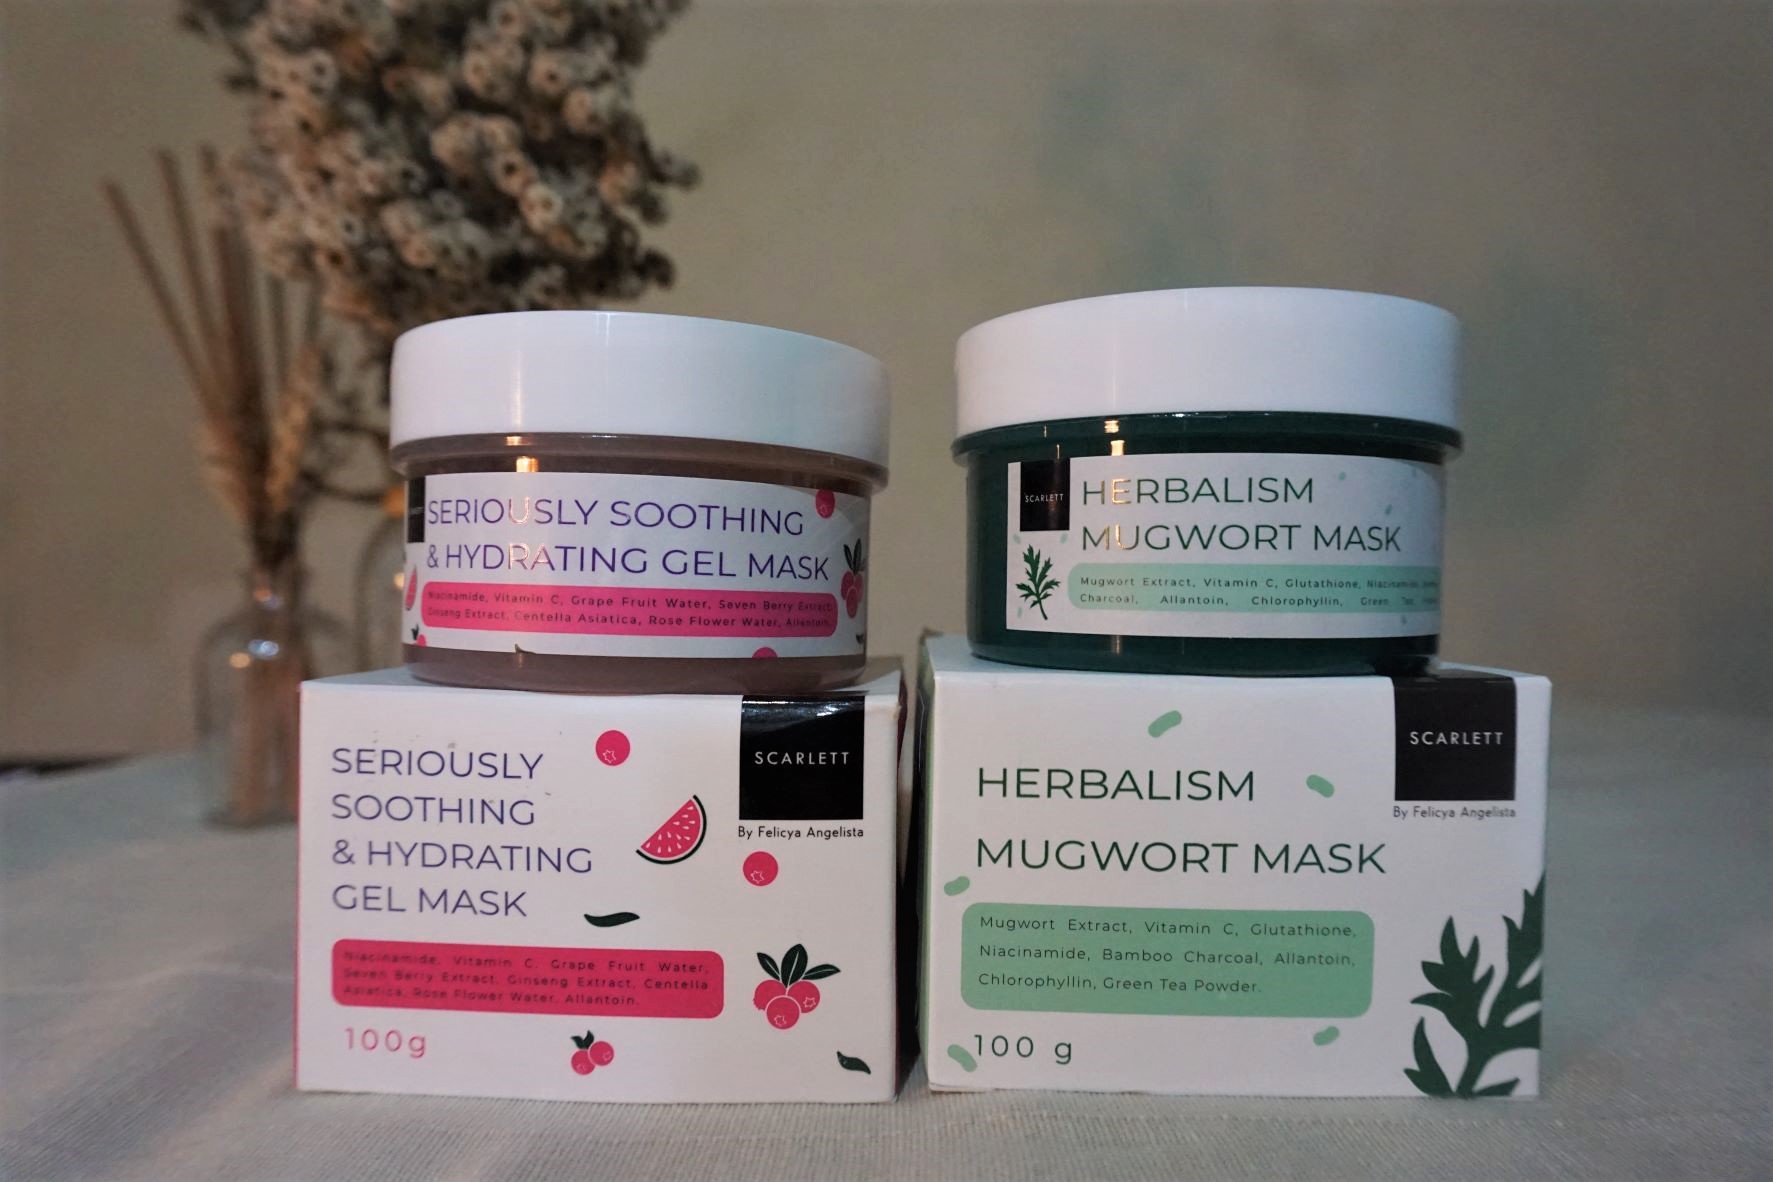 Scarlett Herbalism Mugwort Mask dan Seriously Soothing & Hydrating Gel Mask